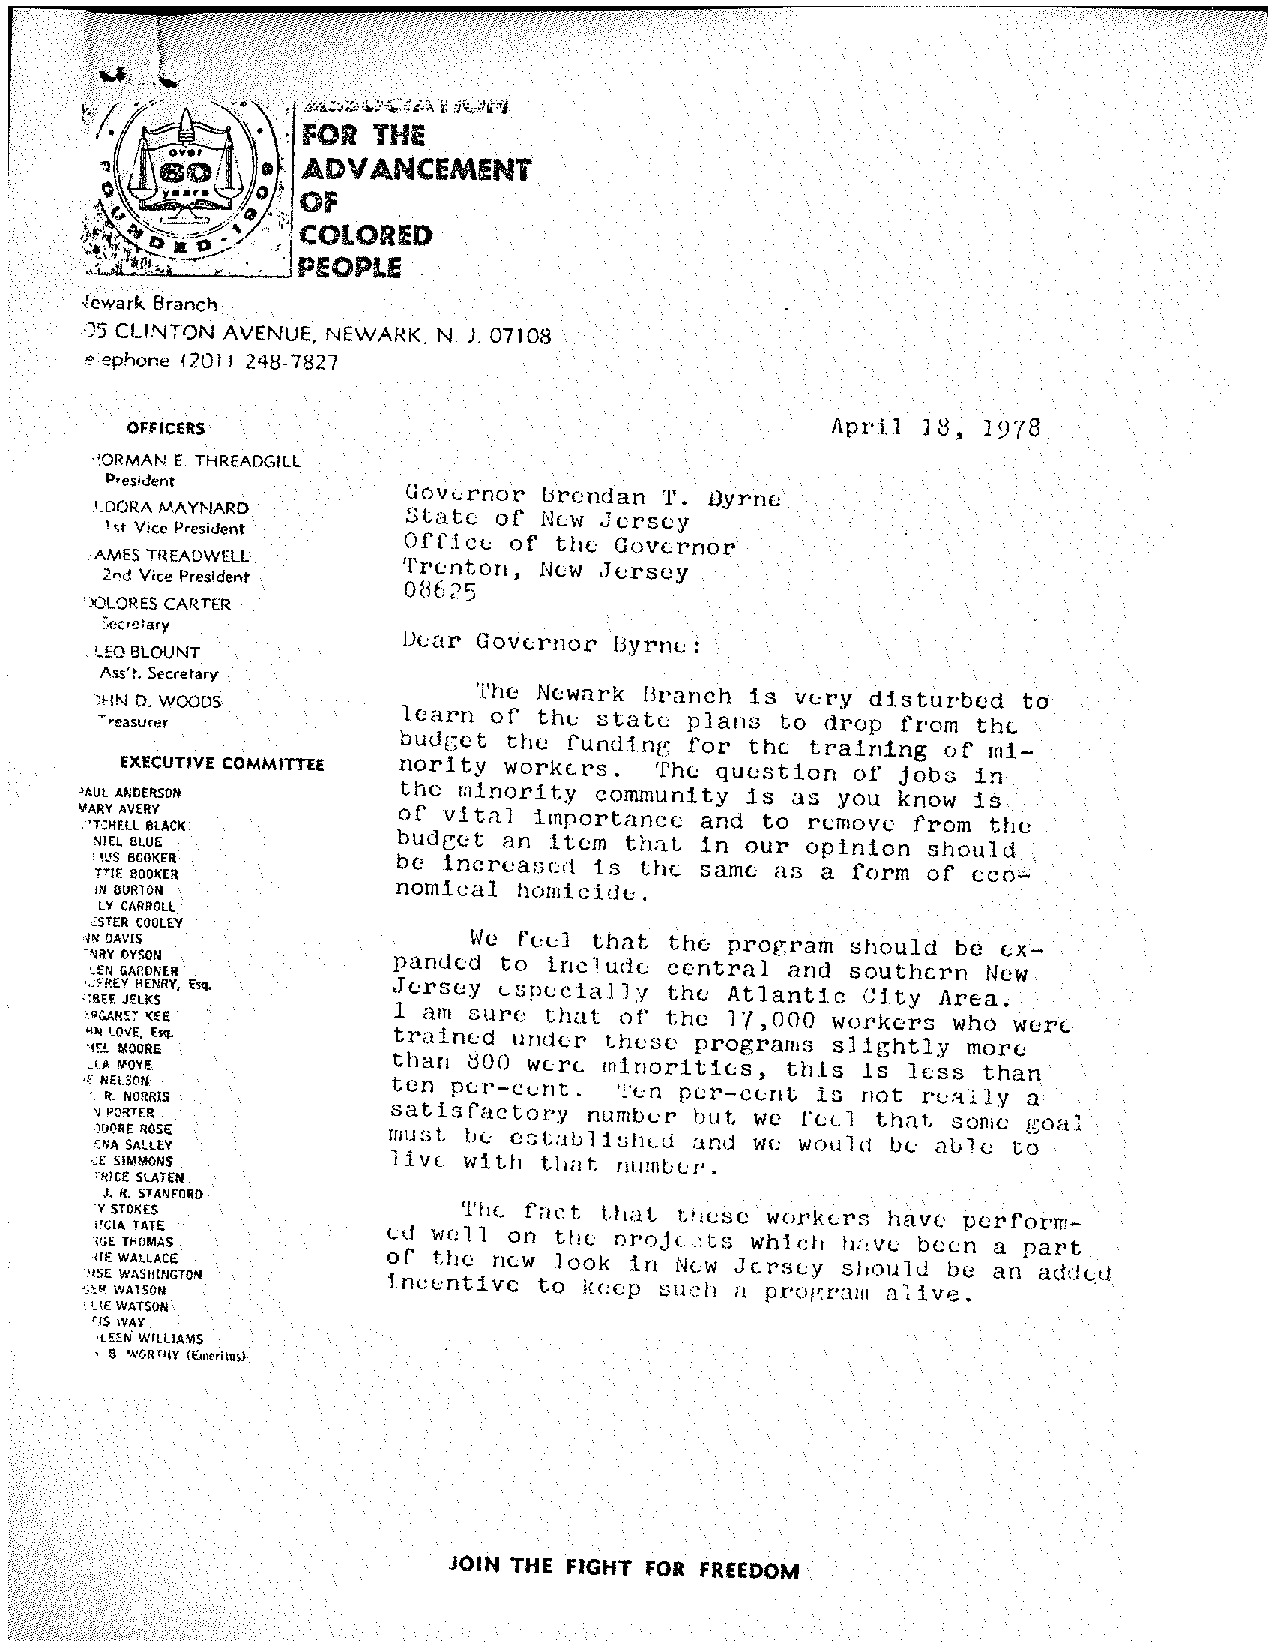 Newark NAACP Letter to Gov. Byrne (1978)